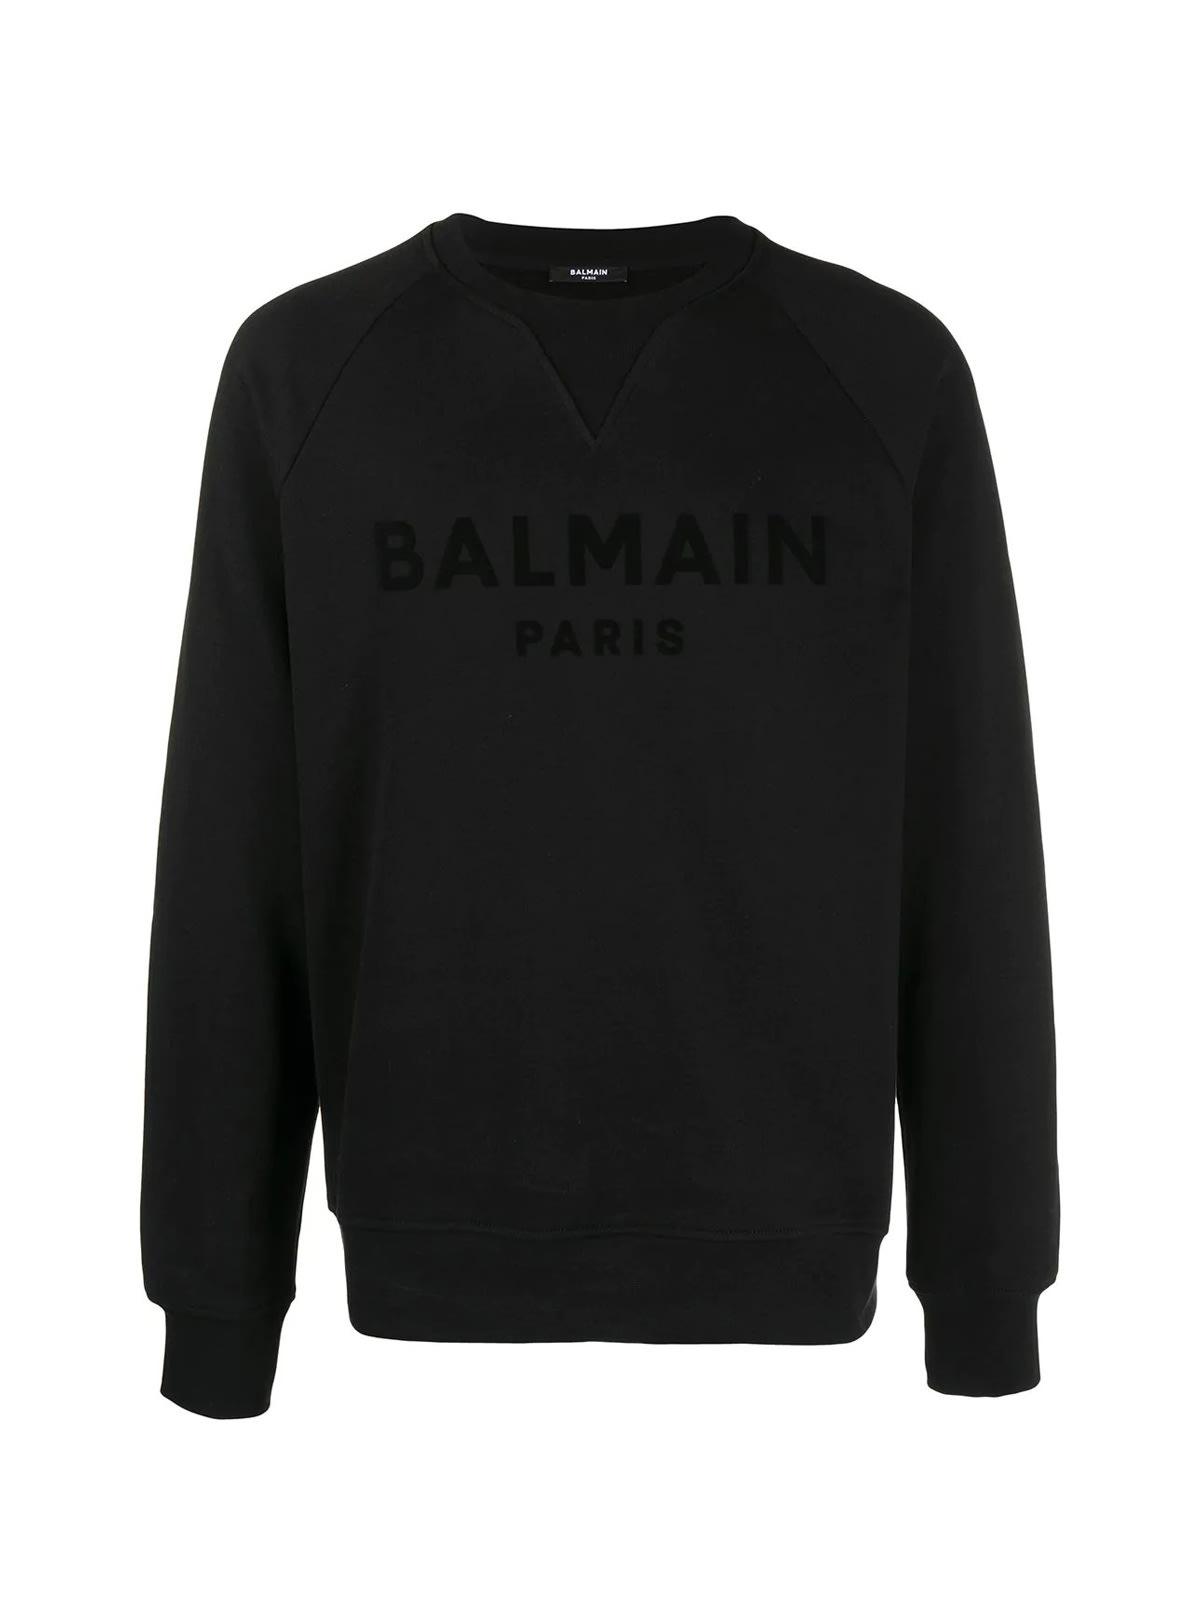 Balmain Black Flock Sweatshirt